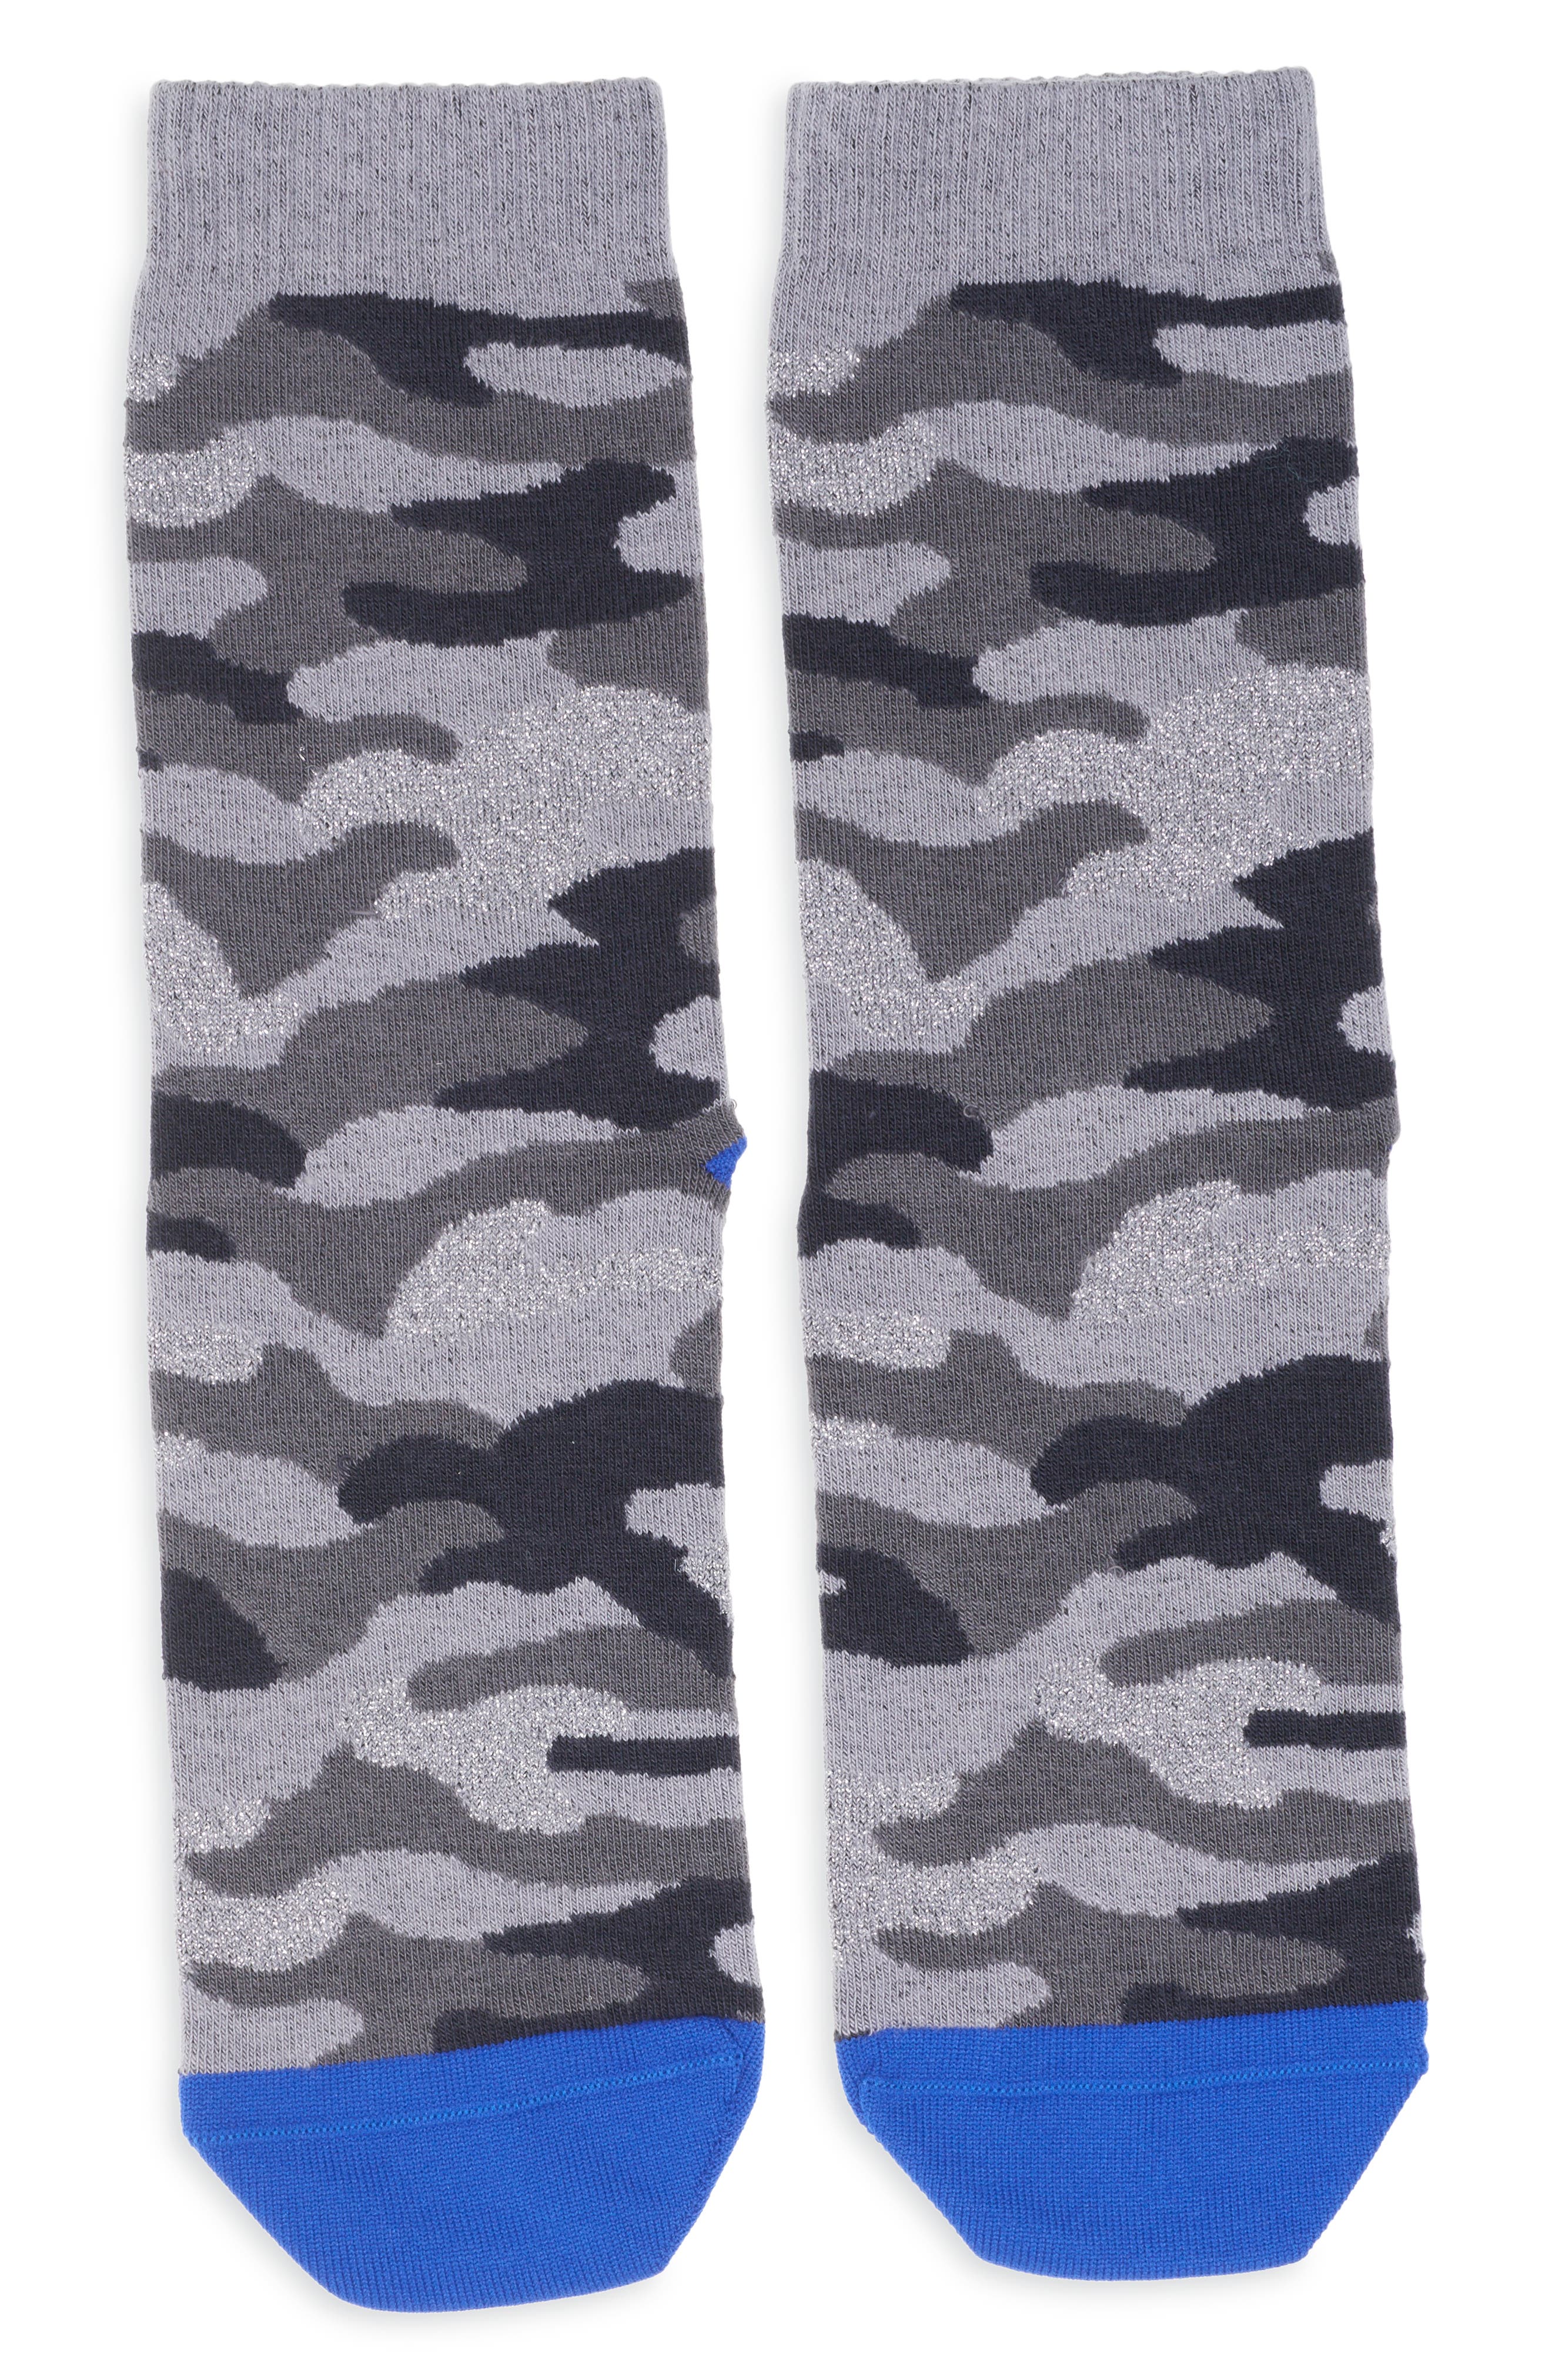 Golden Goose Camouflage Crew Socks in Dark Grey/Bluette at Nordstrom, Size Small